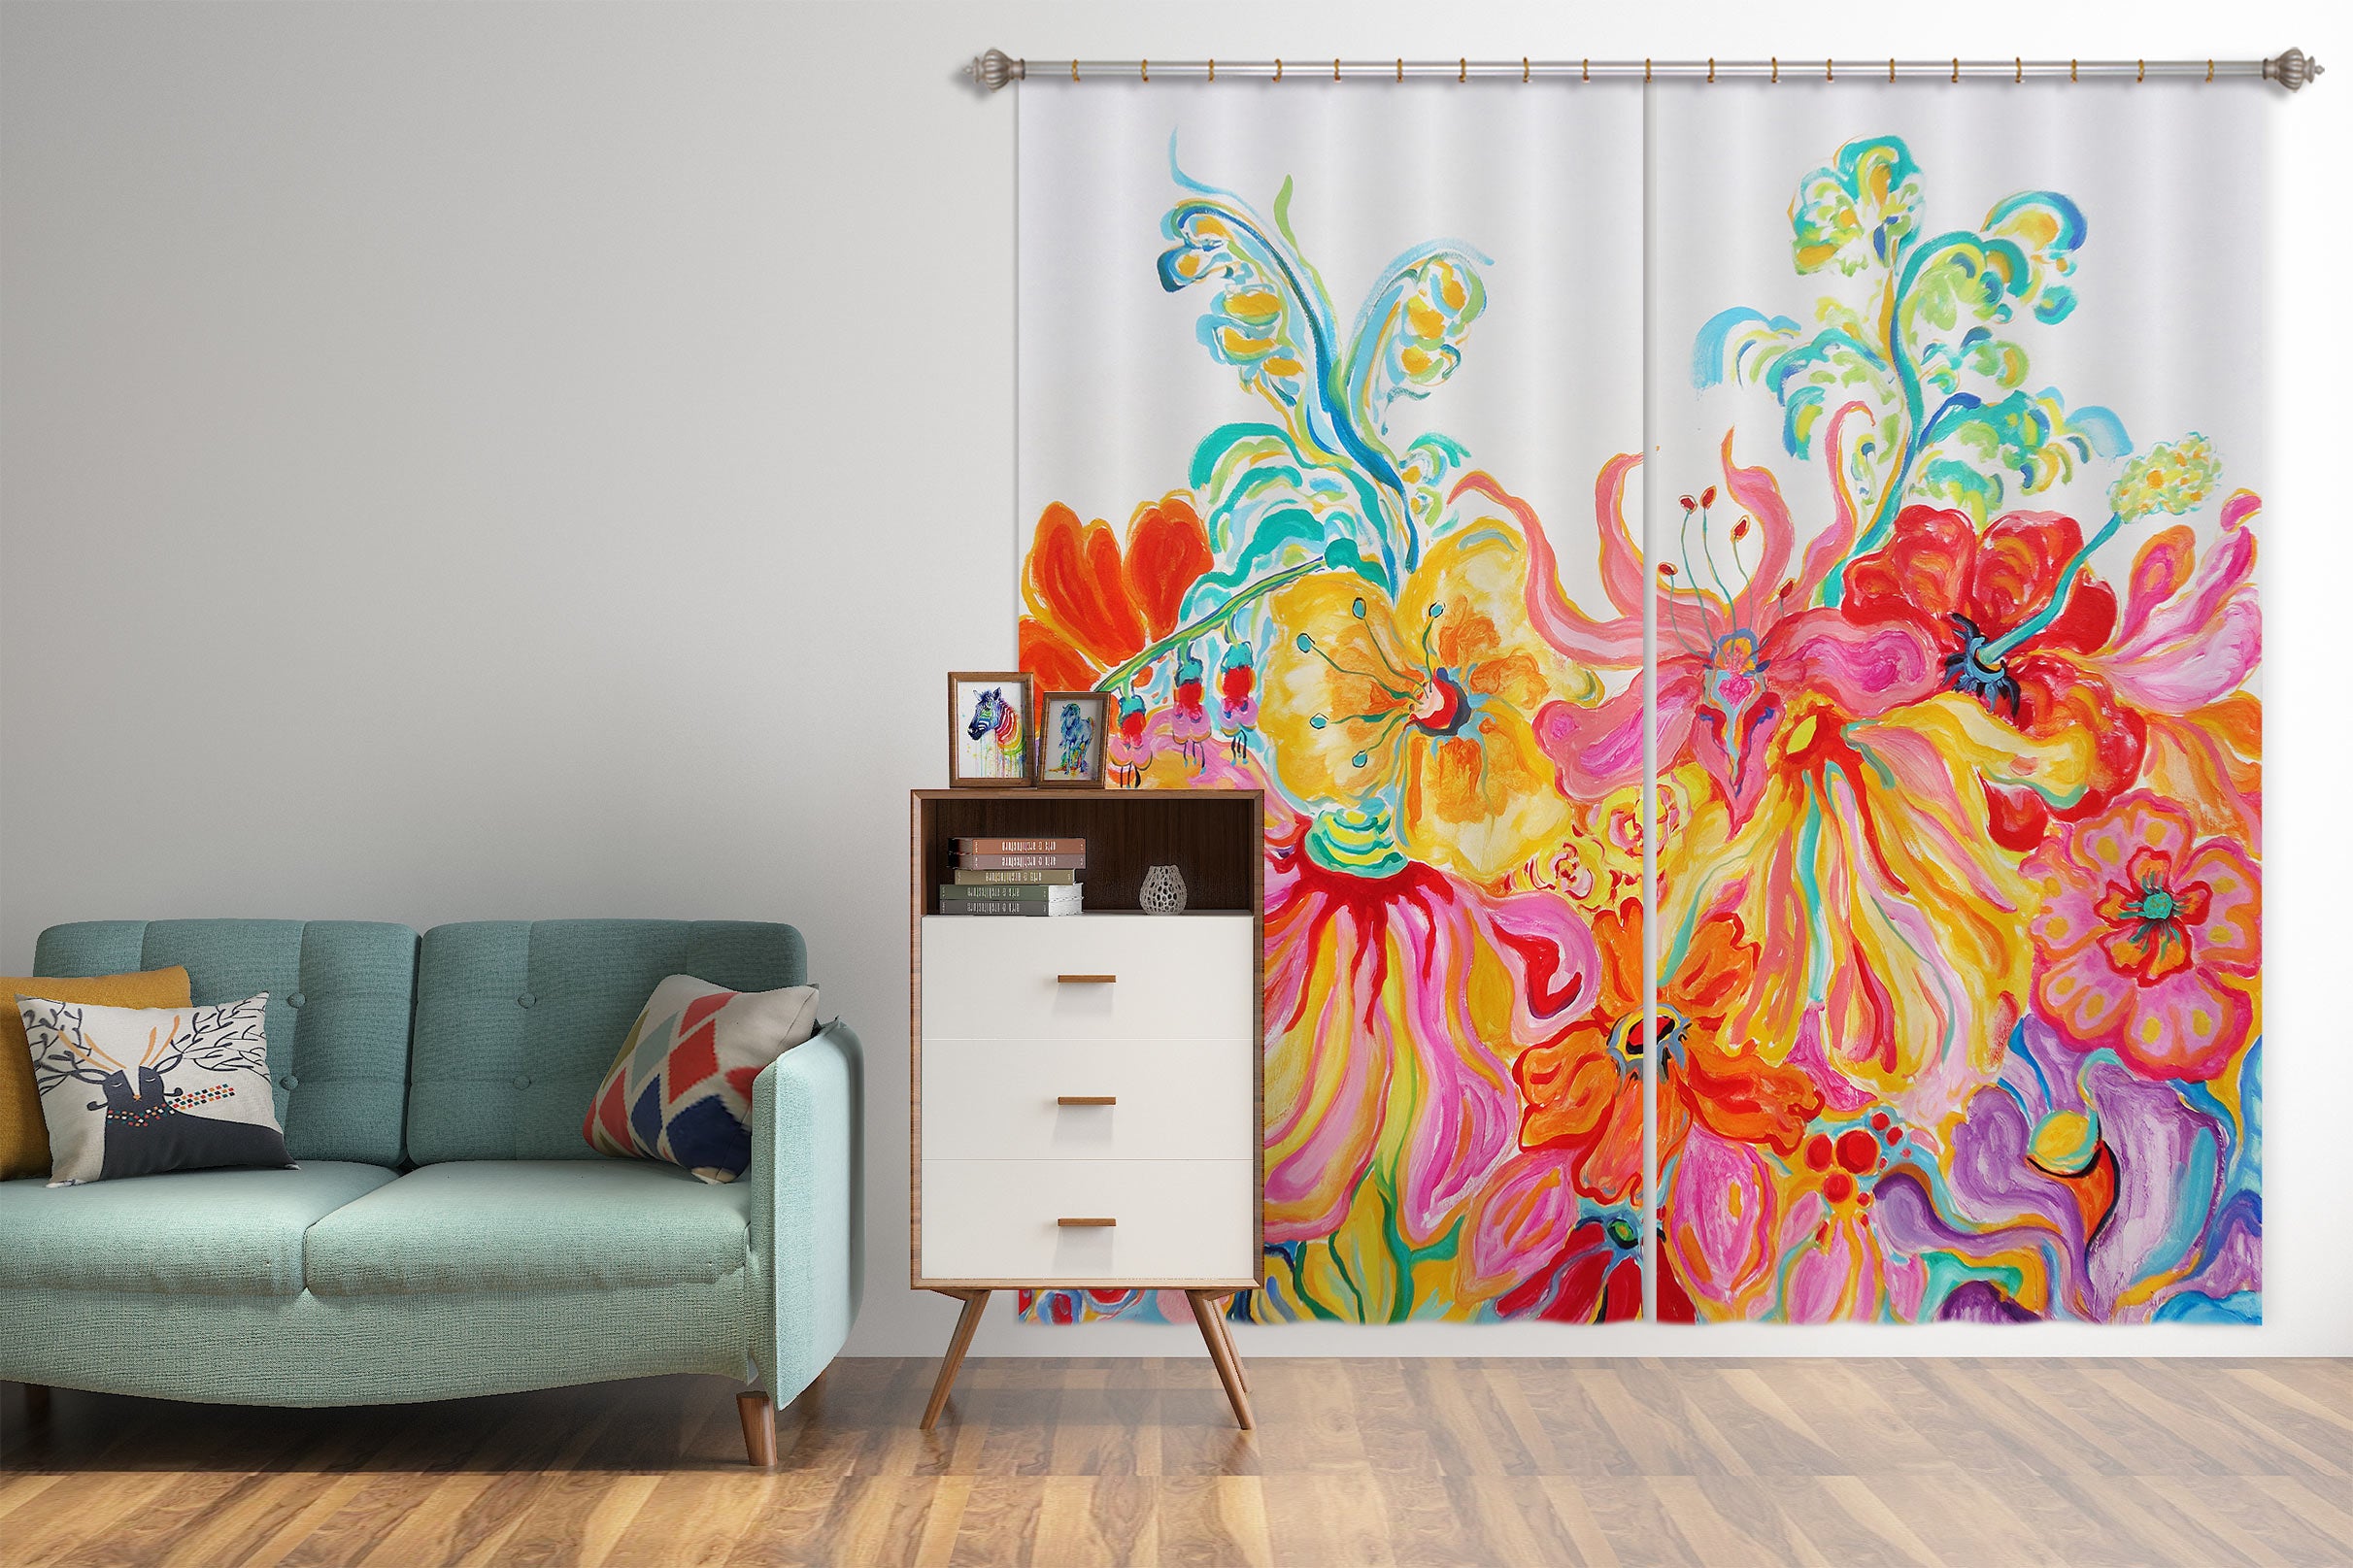 3D Colorful Flower 2450 Misako Chida Curtain Curtains Drapes